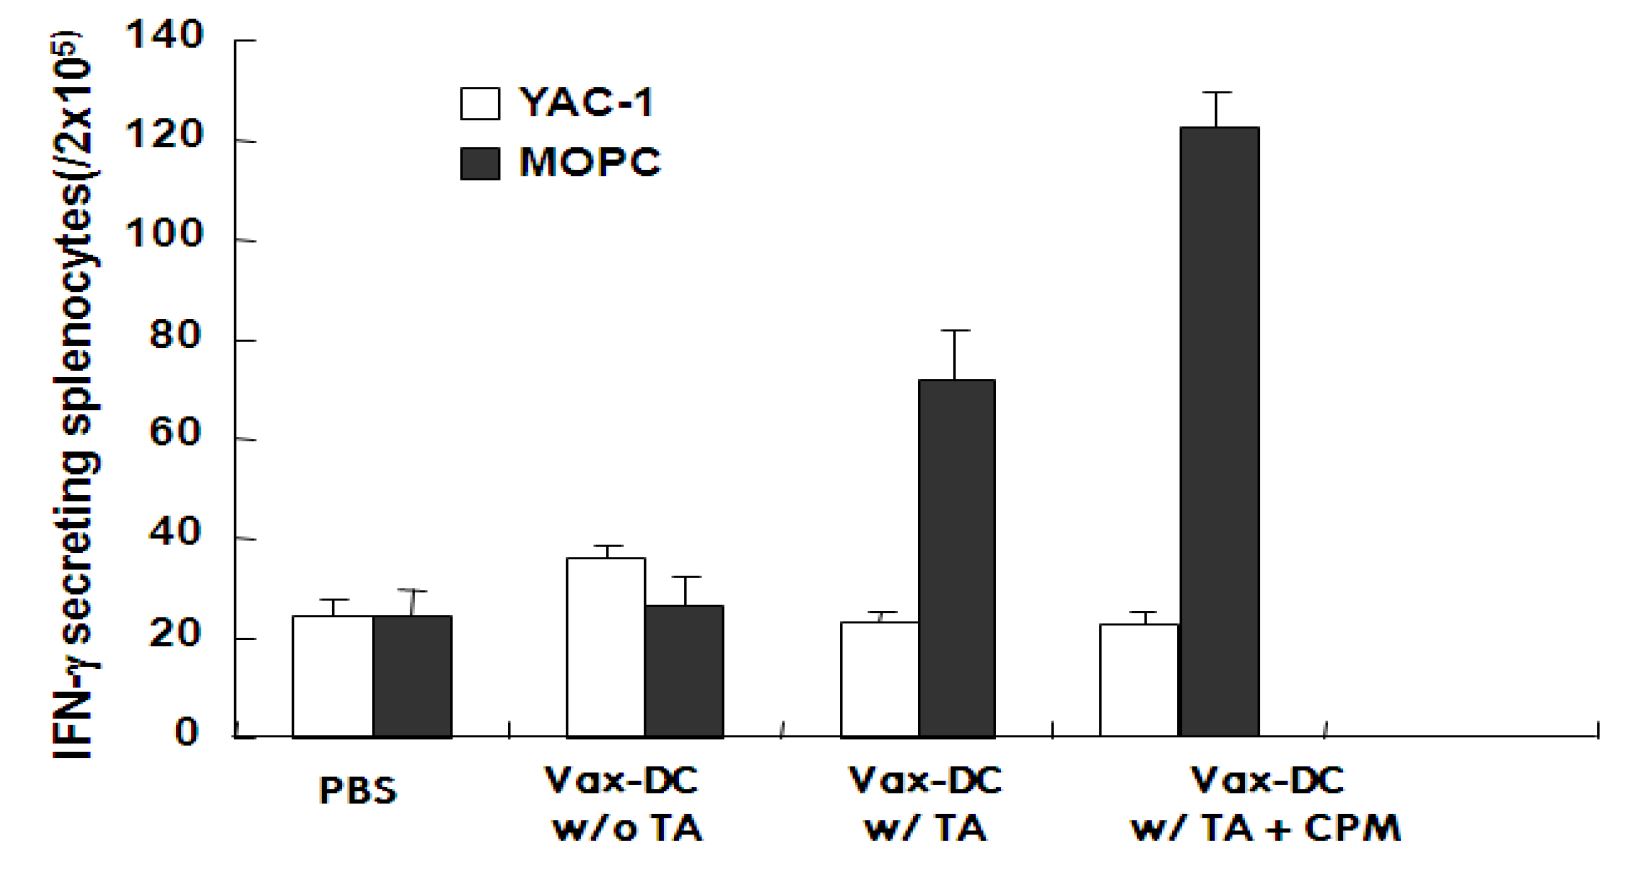 Vax-DC 치료 종료 후 마우스의 비장에서 분리한 T 세포에 의한 항암 면역반응